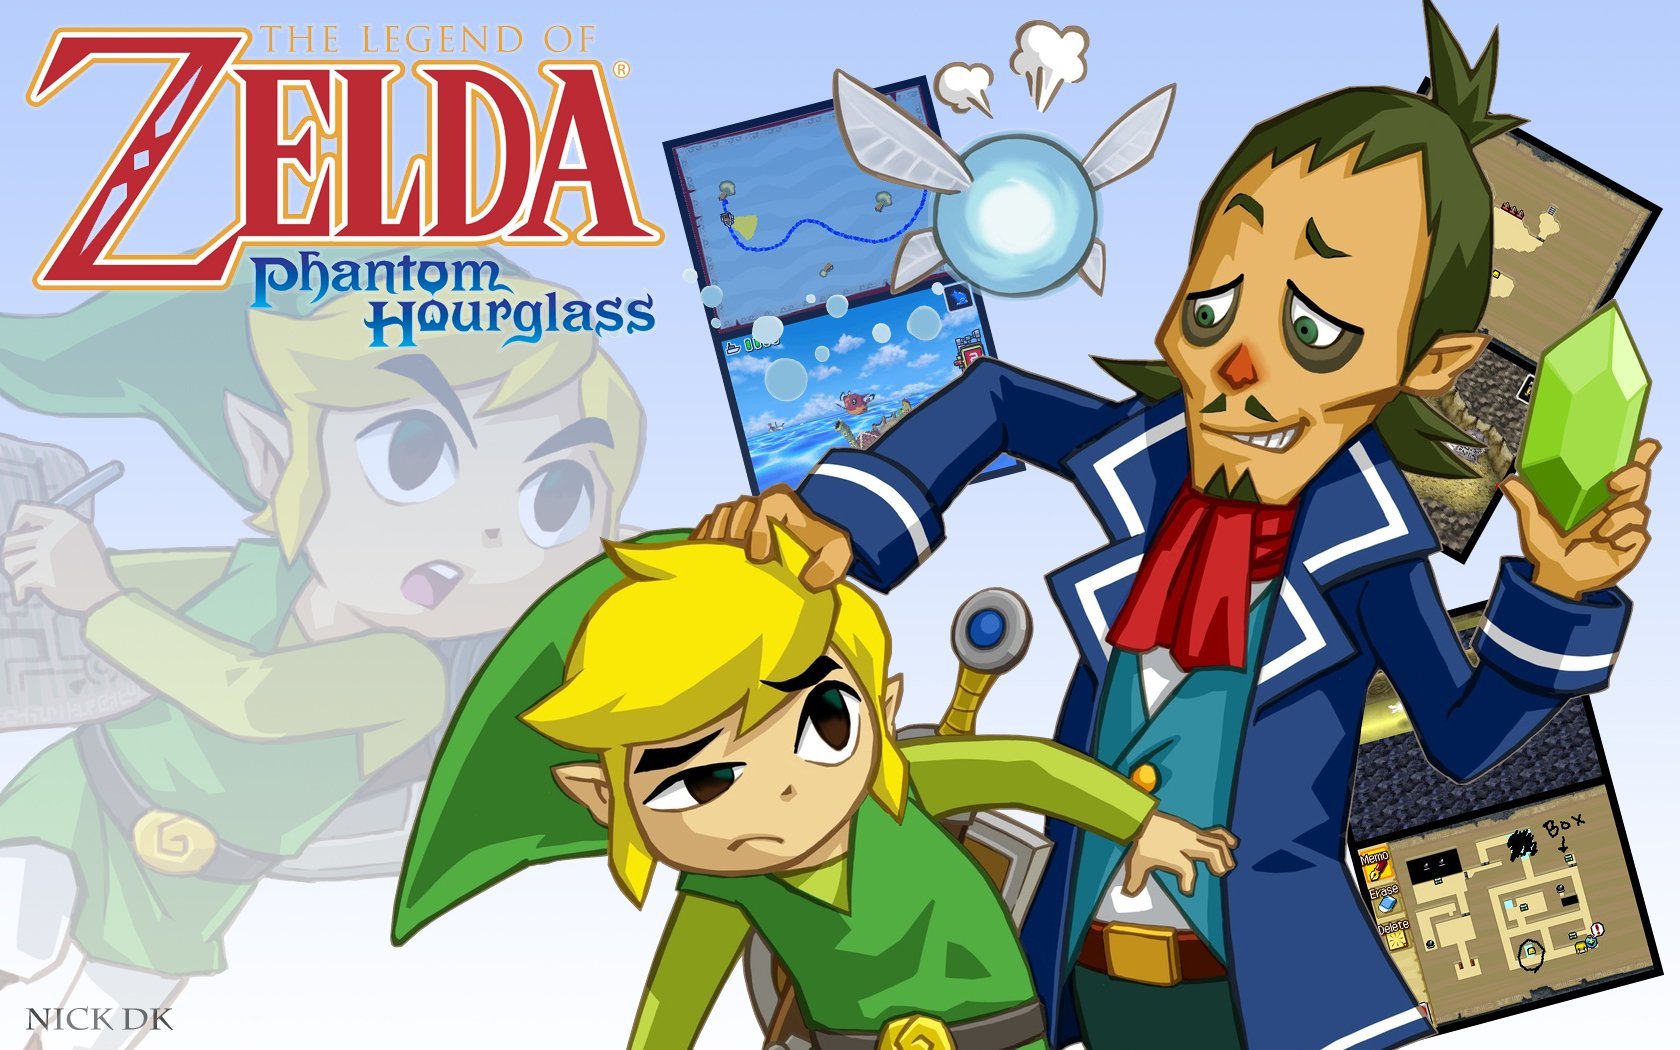 The Legend of Zelda: Phantom Hourglass HD Wallpaper and Background Image